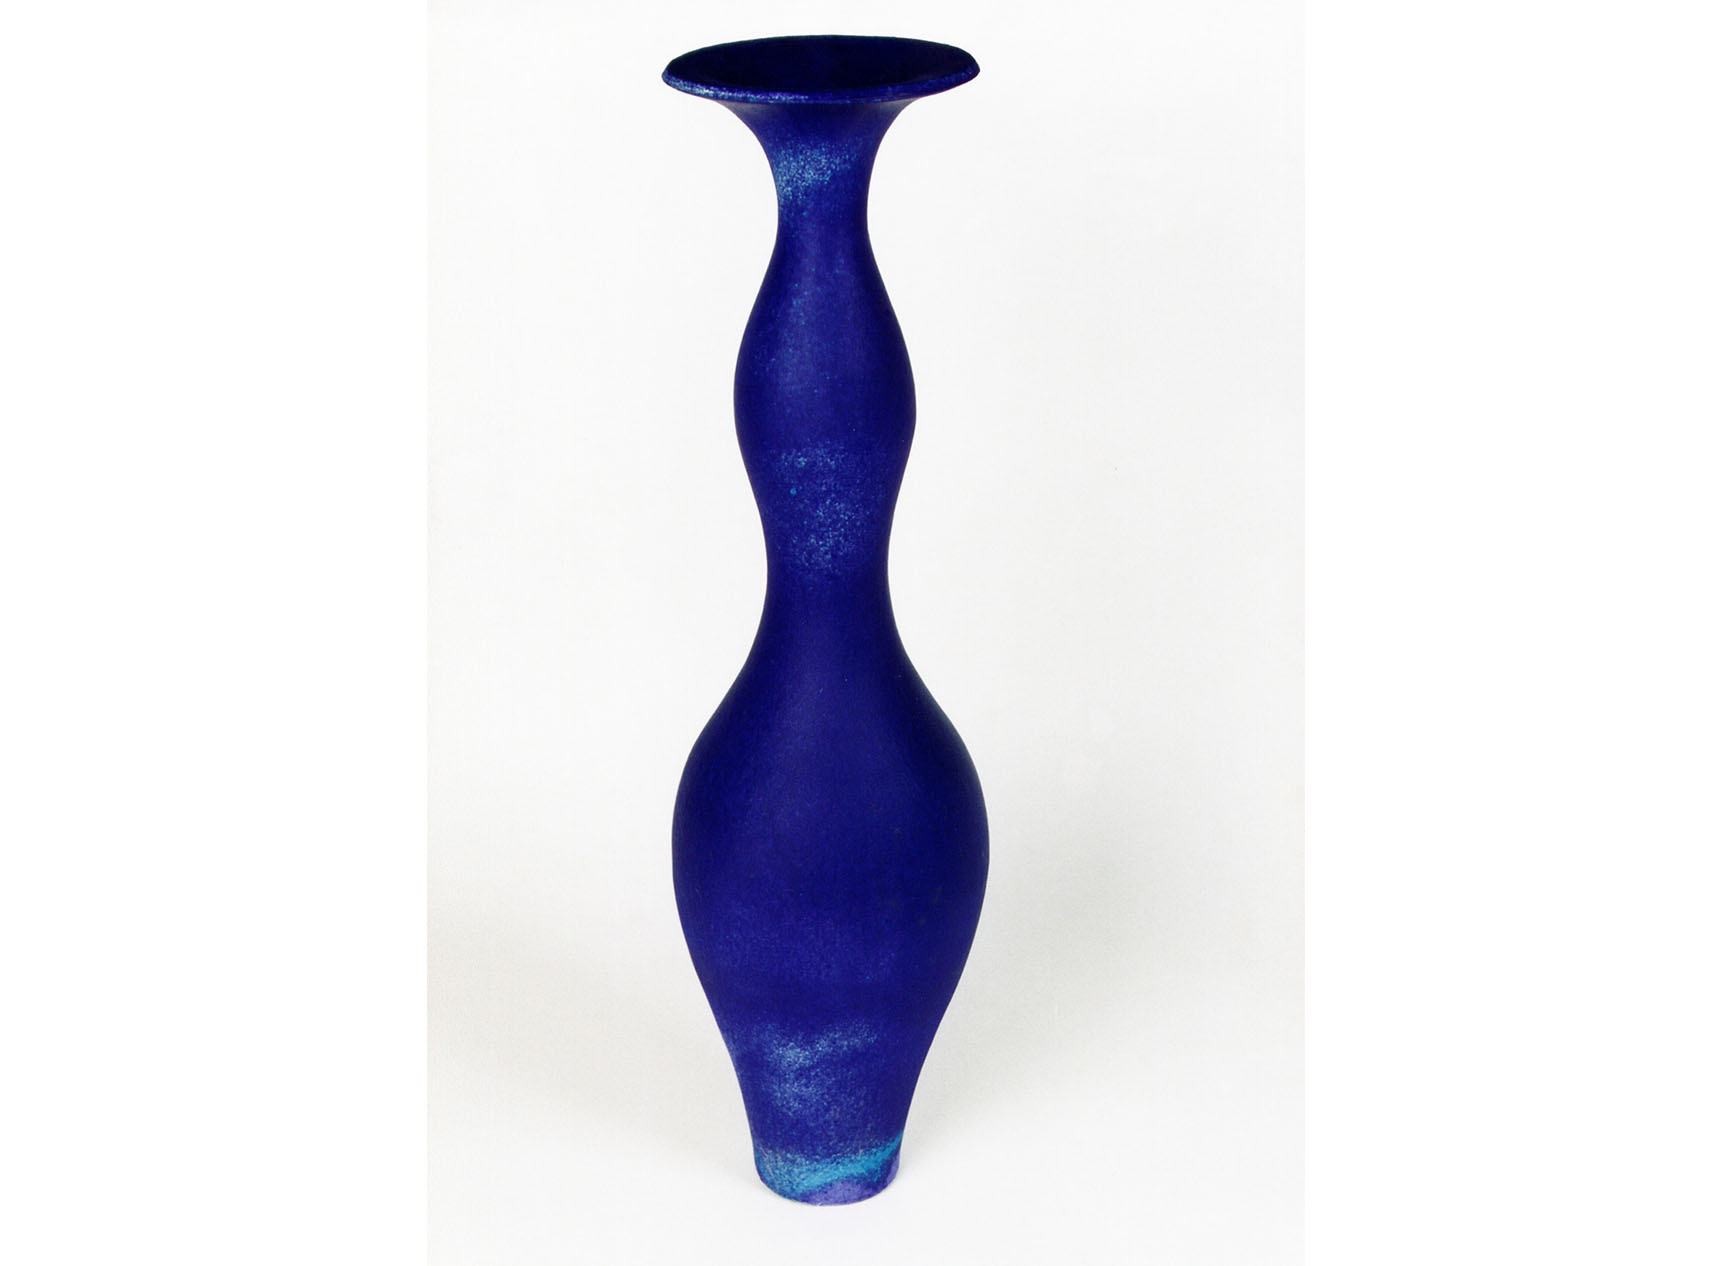 Large curvacious vase decorated in a barium glaze - bright blue